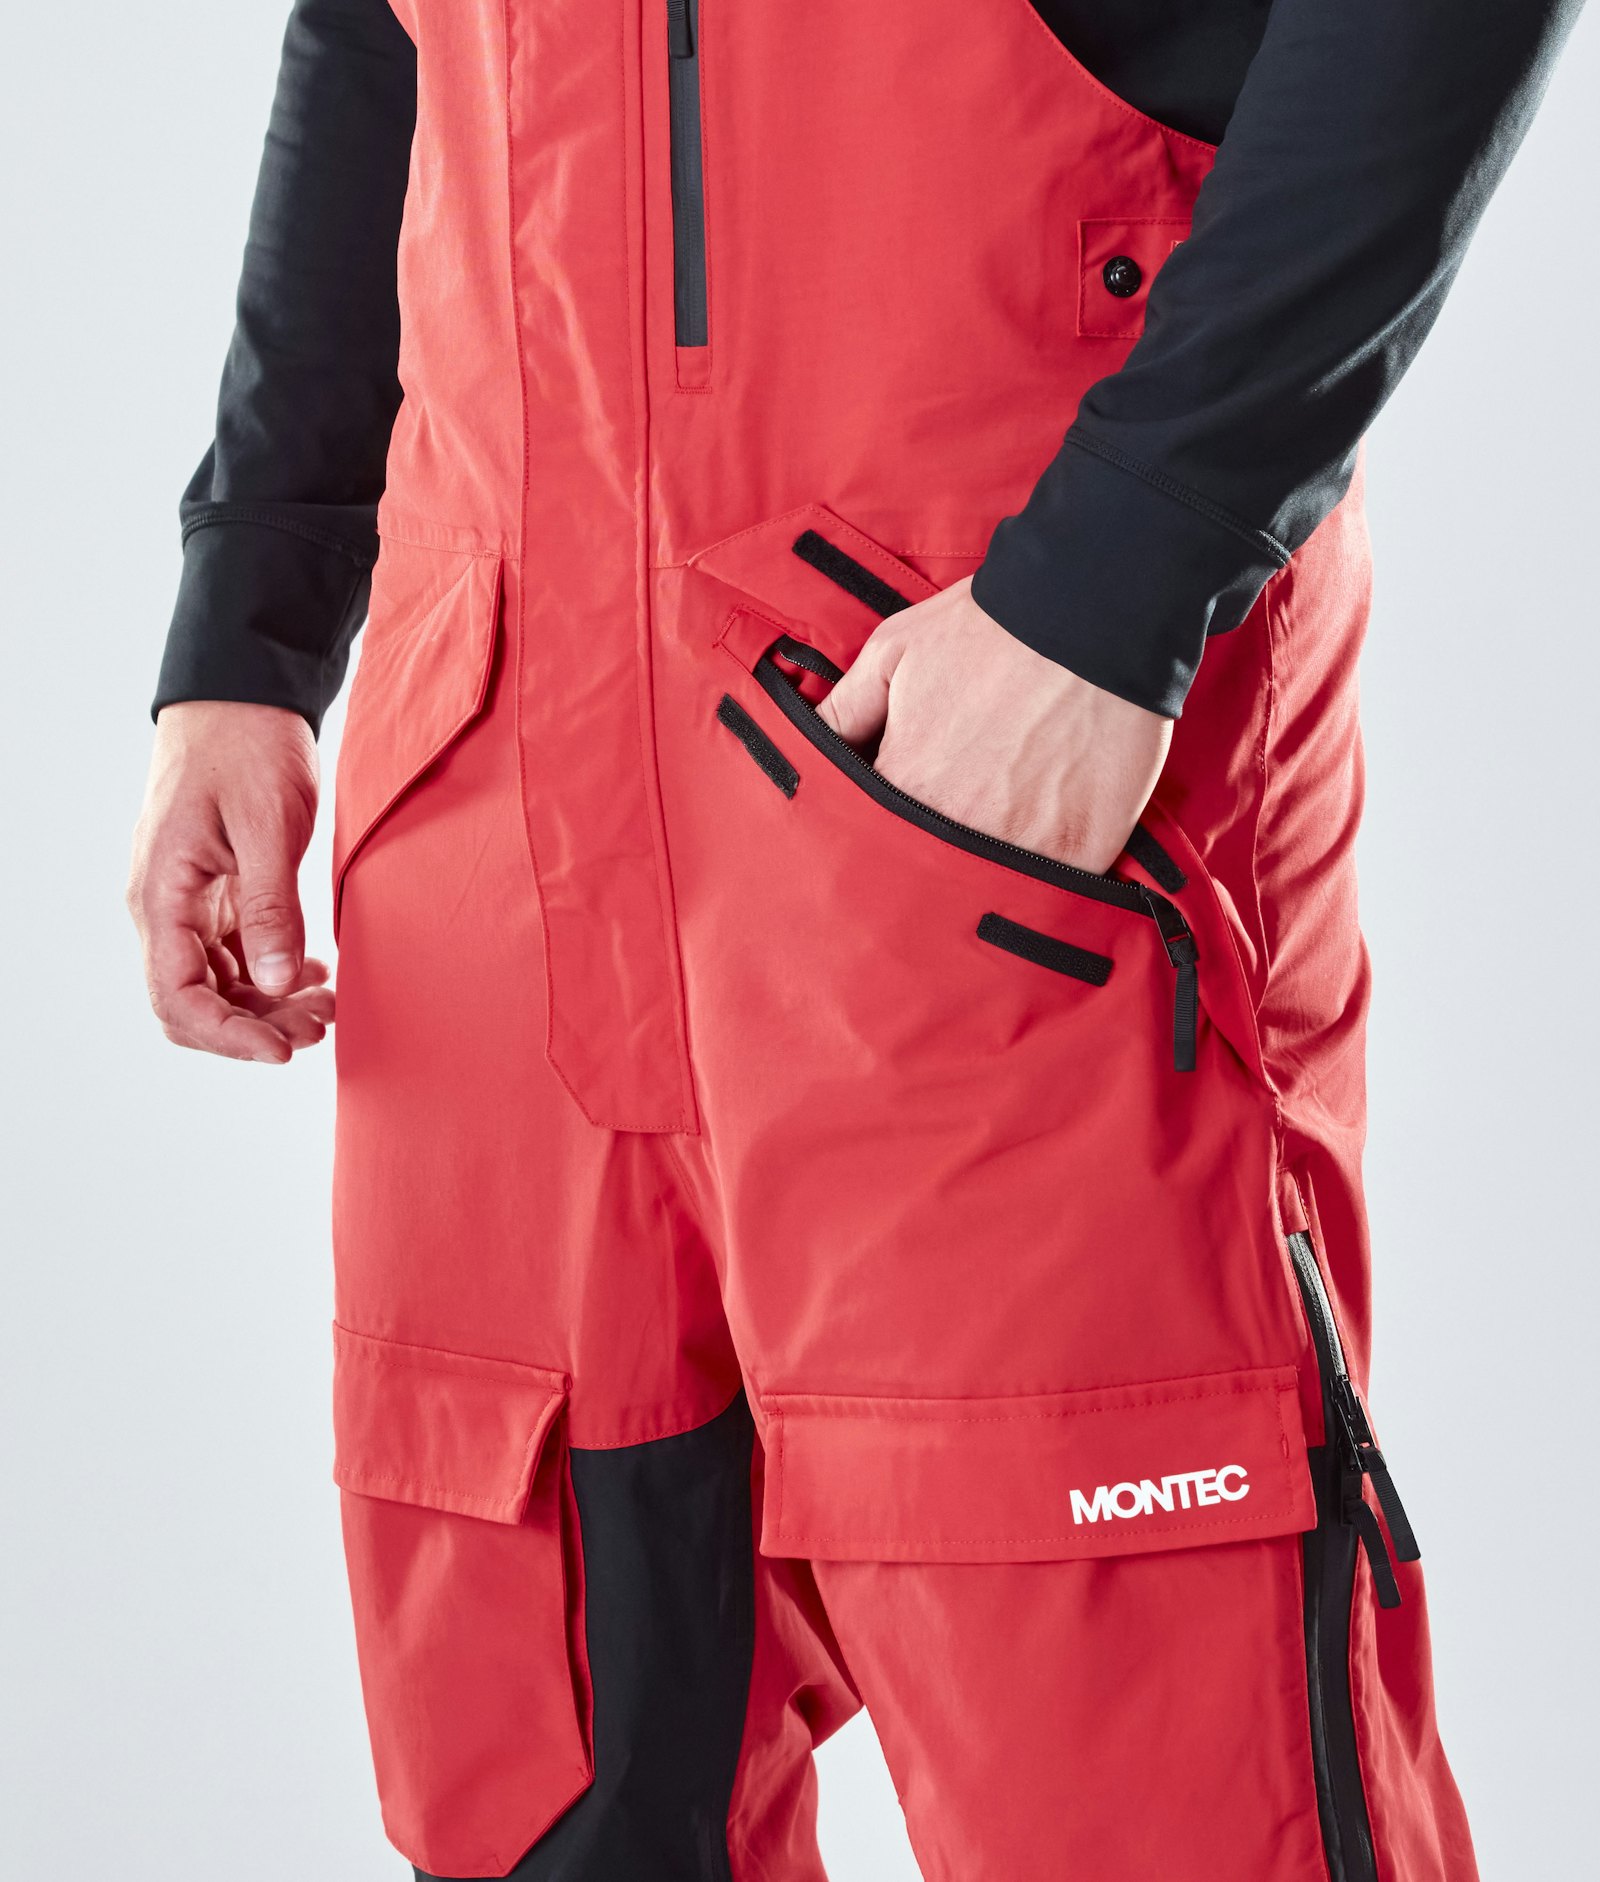 Fawk 2020 Ski Pants Men Red/Black, Image 5 of 6